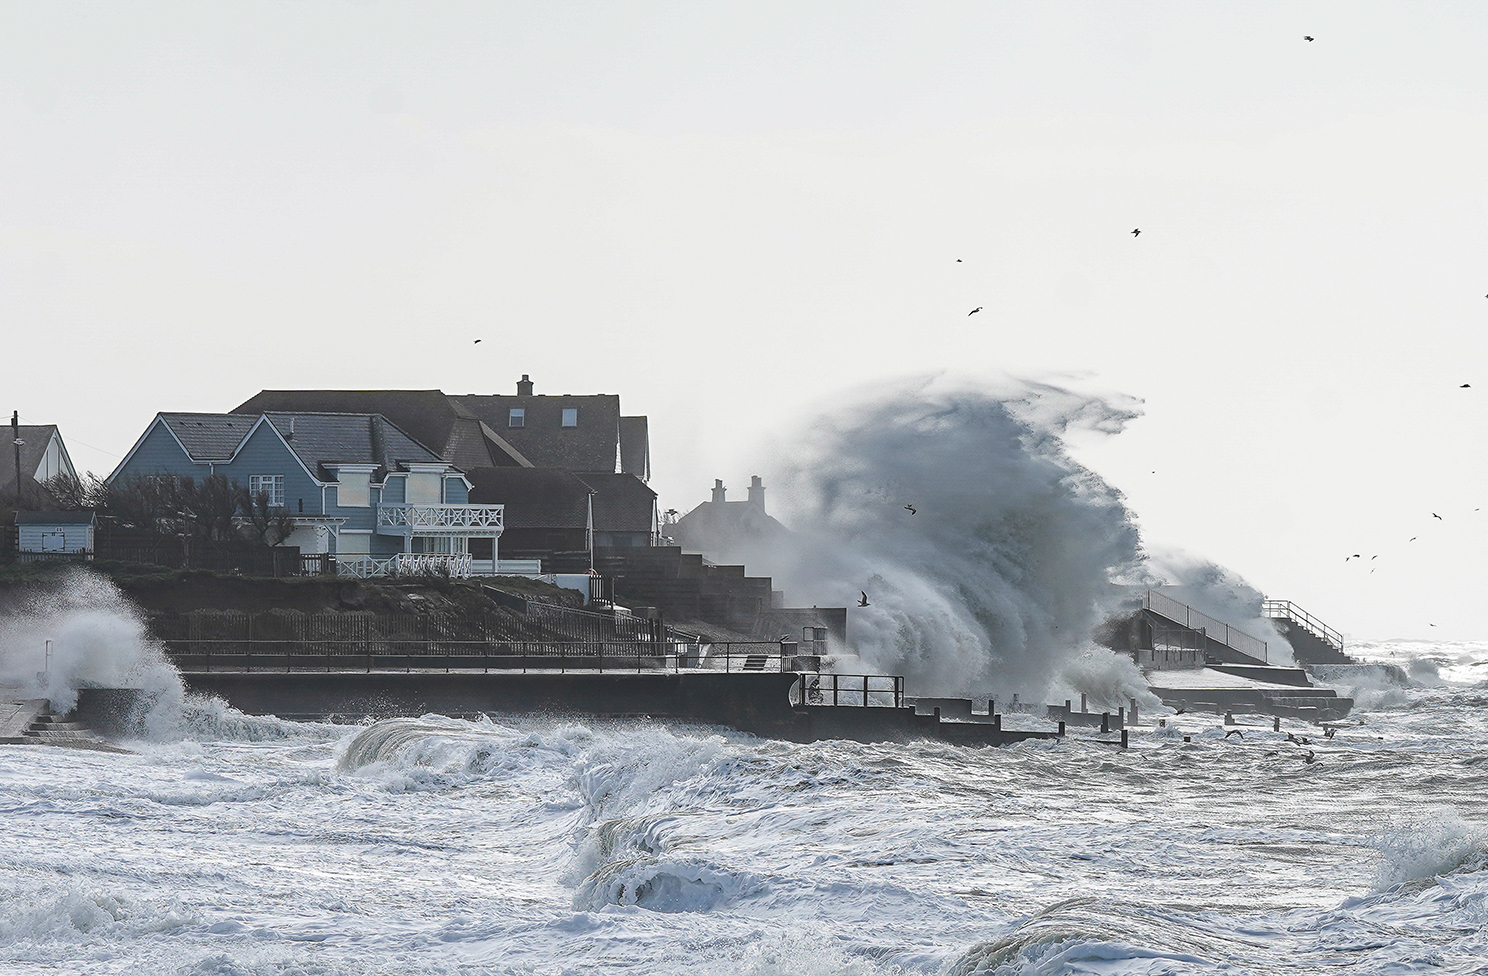 2nd Place Rough seas in Selsey by Coastal JJ UK @CoastalJJuk